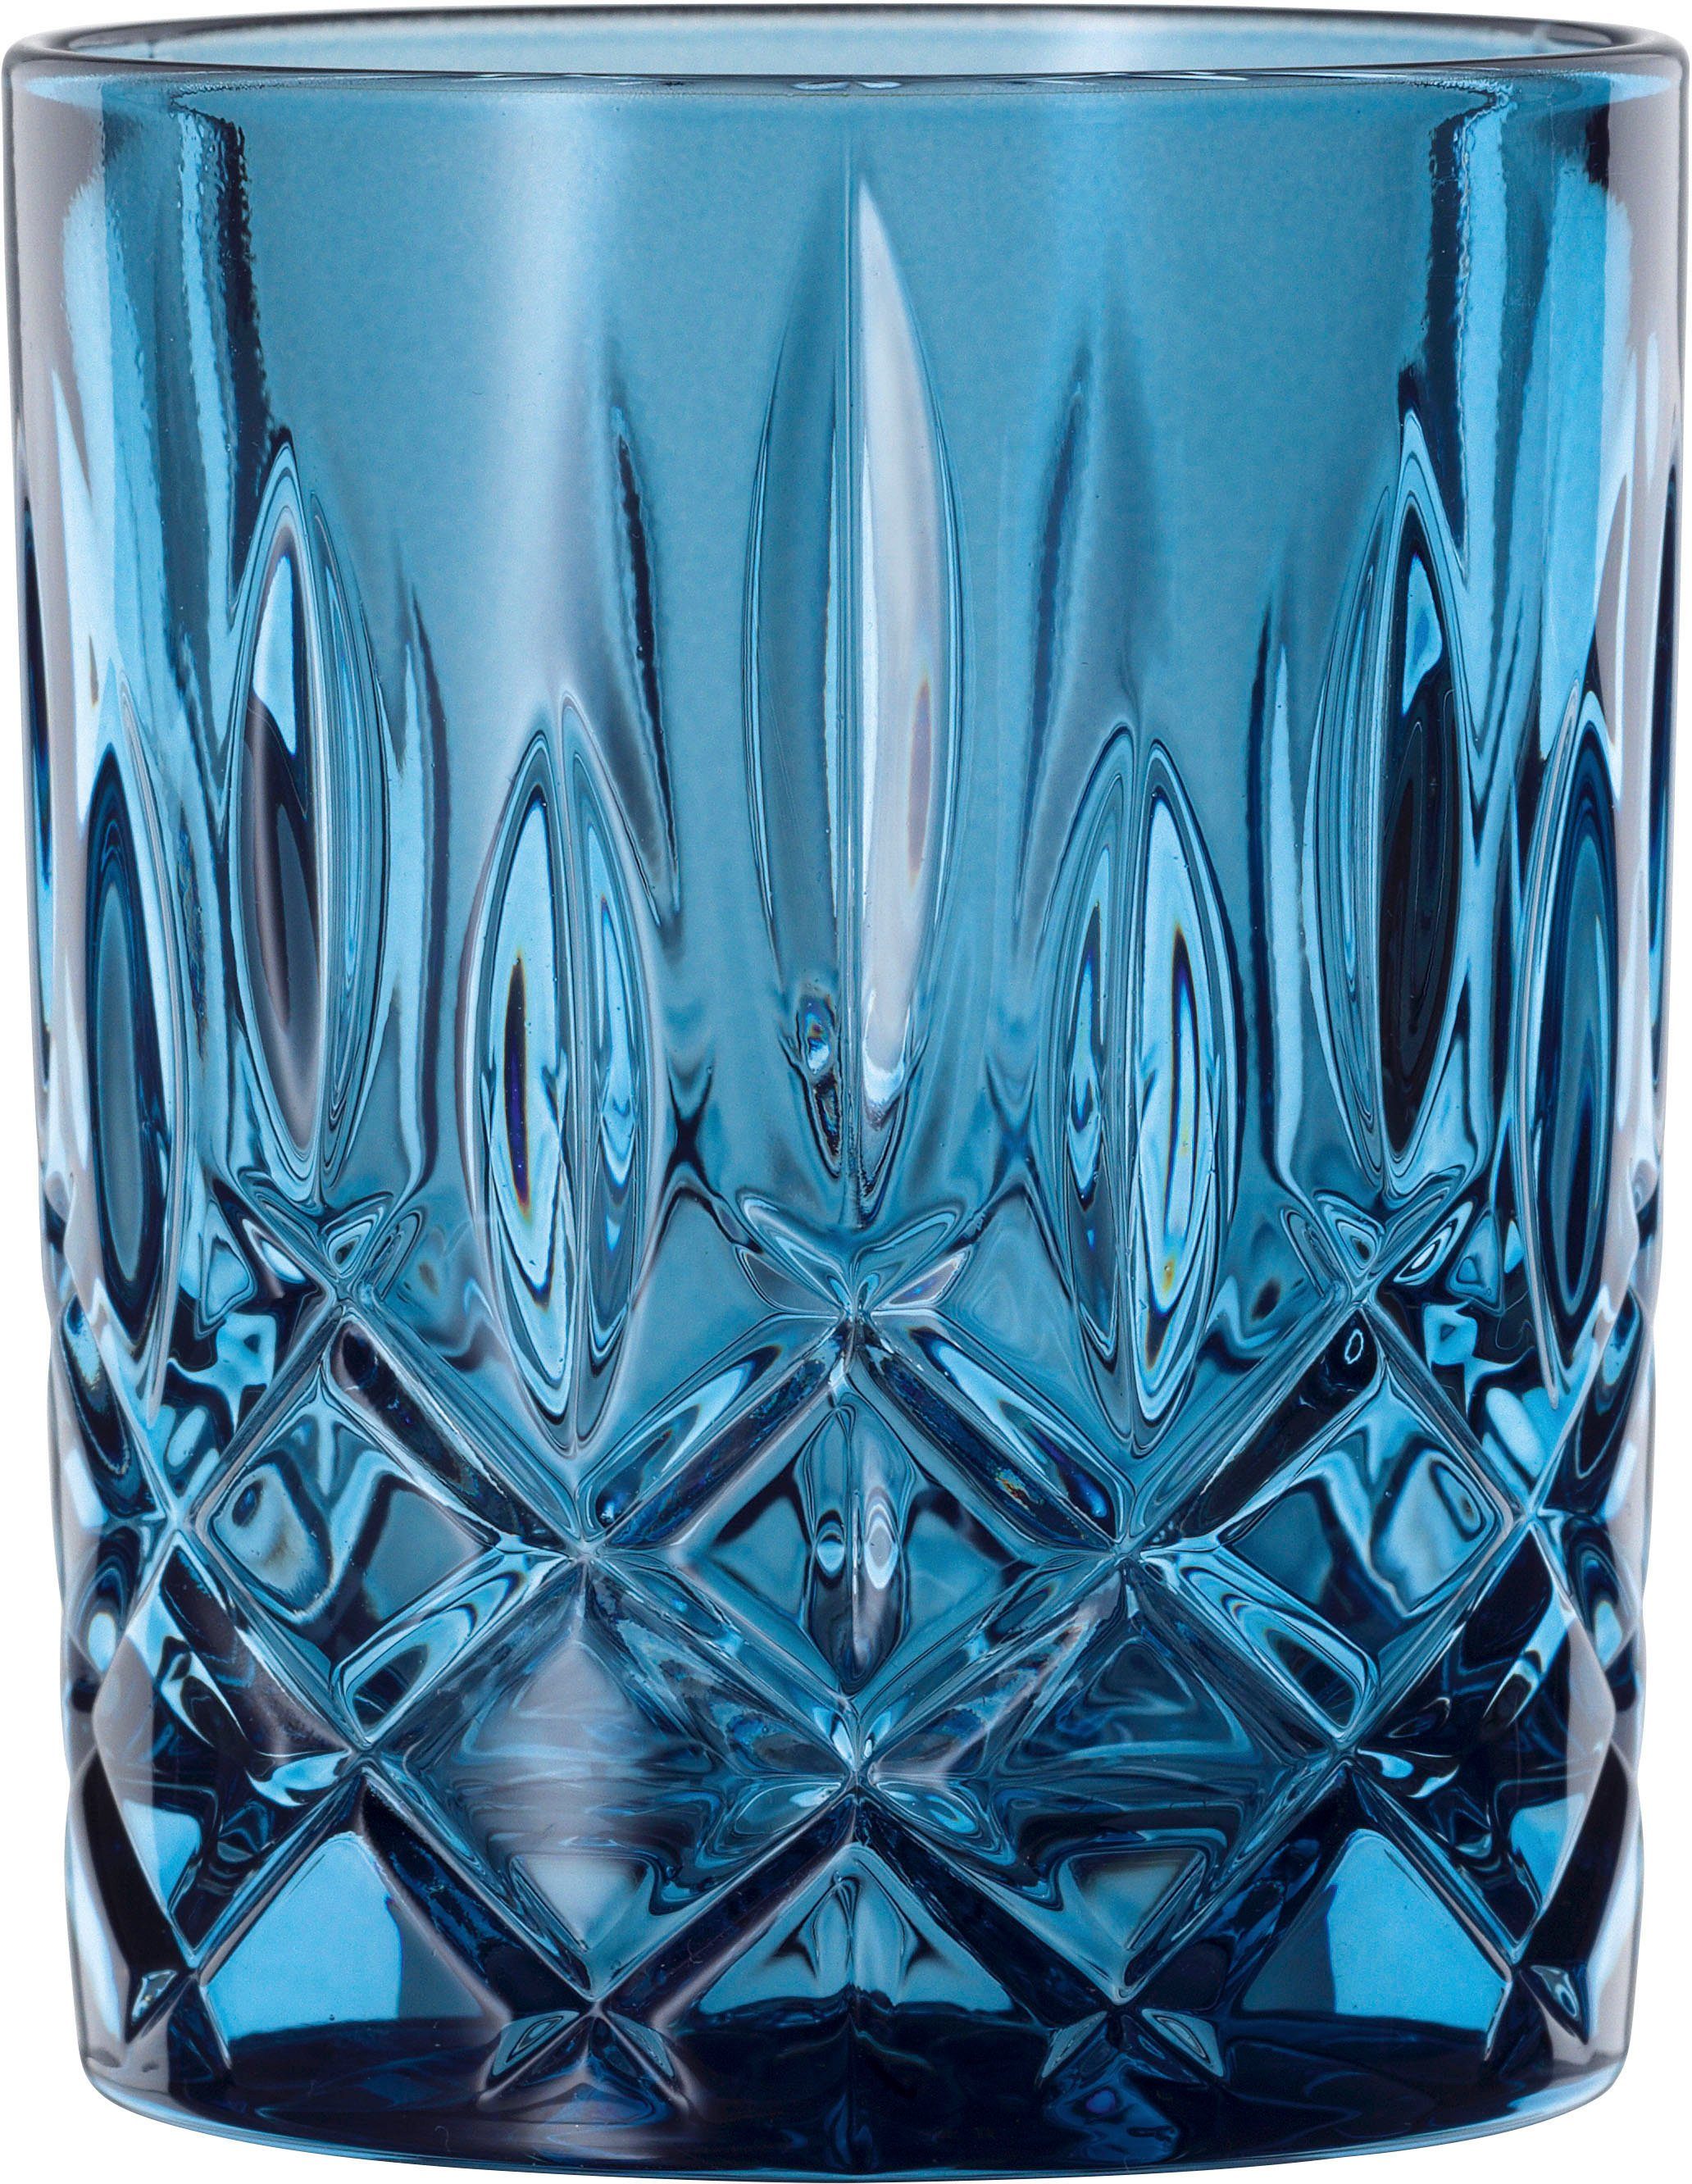 Nachtmann Whiskyglas Noblesse, Kristallglas, Made in Germany, 295 ml, 2-teilig vintage blue